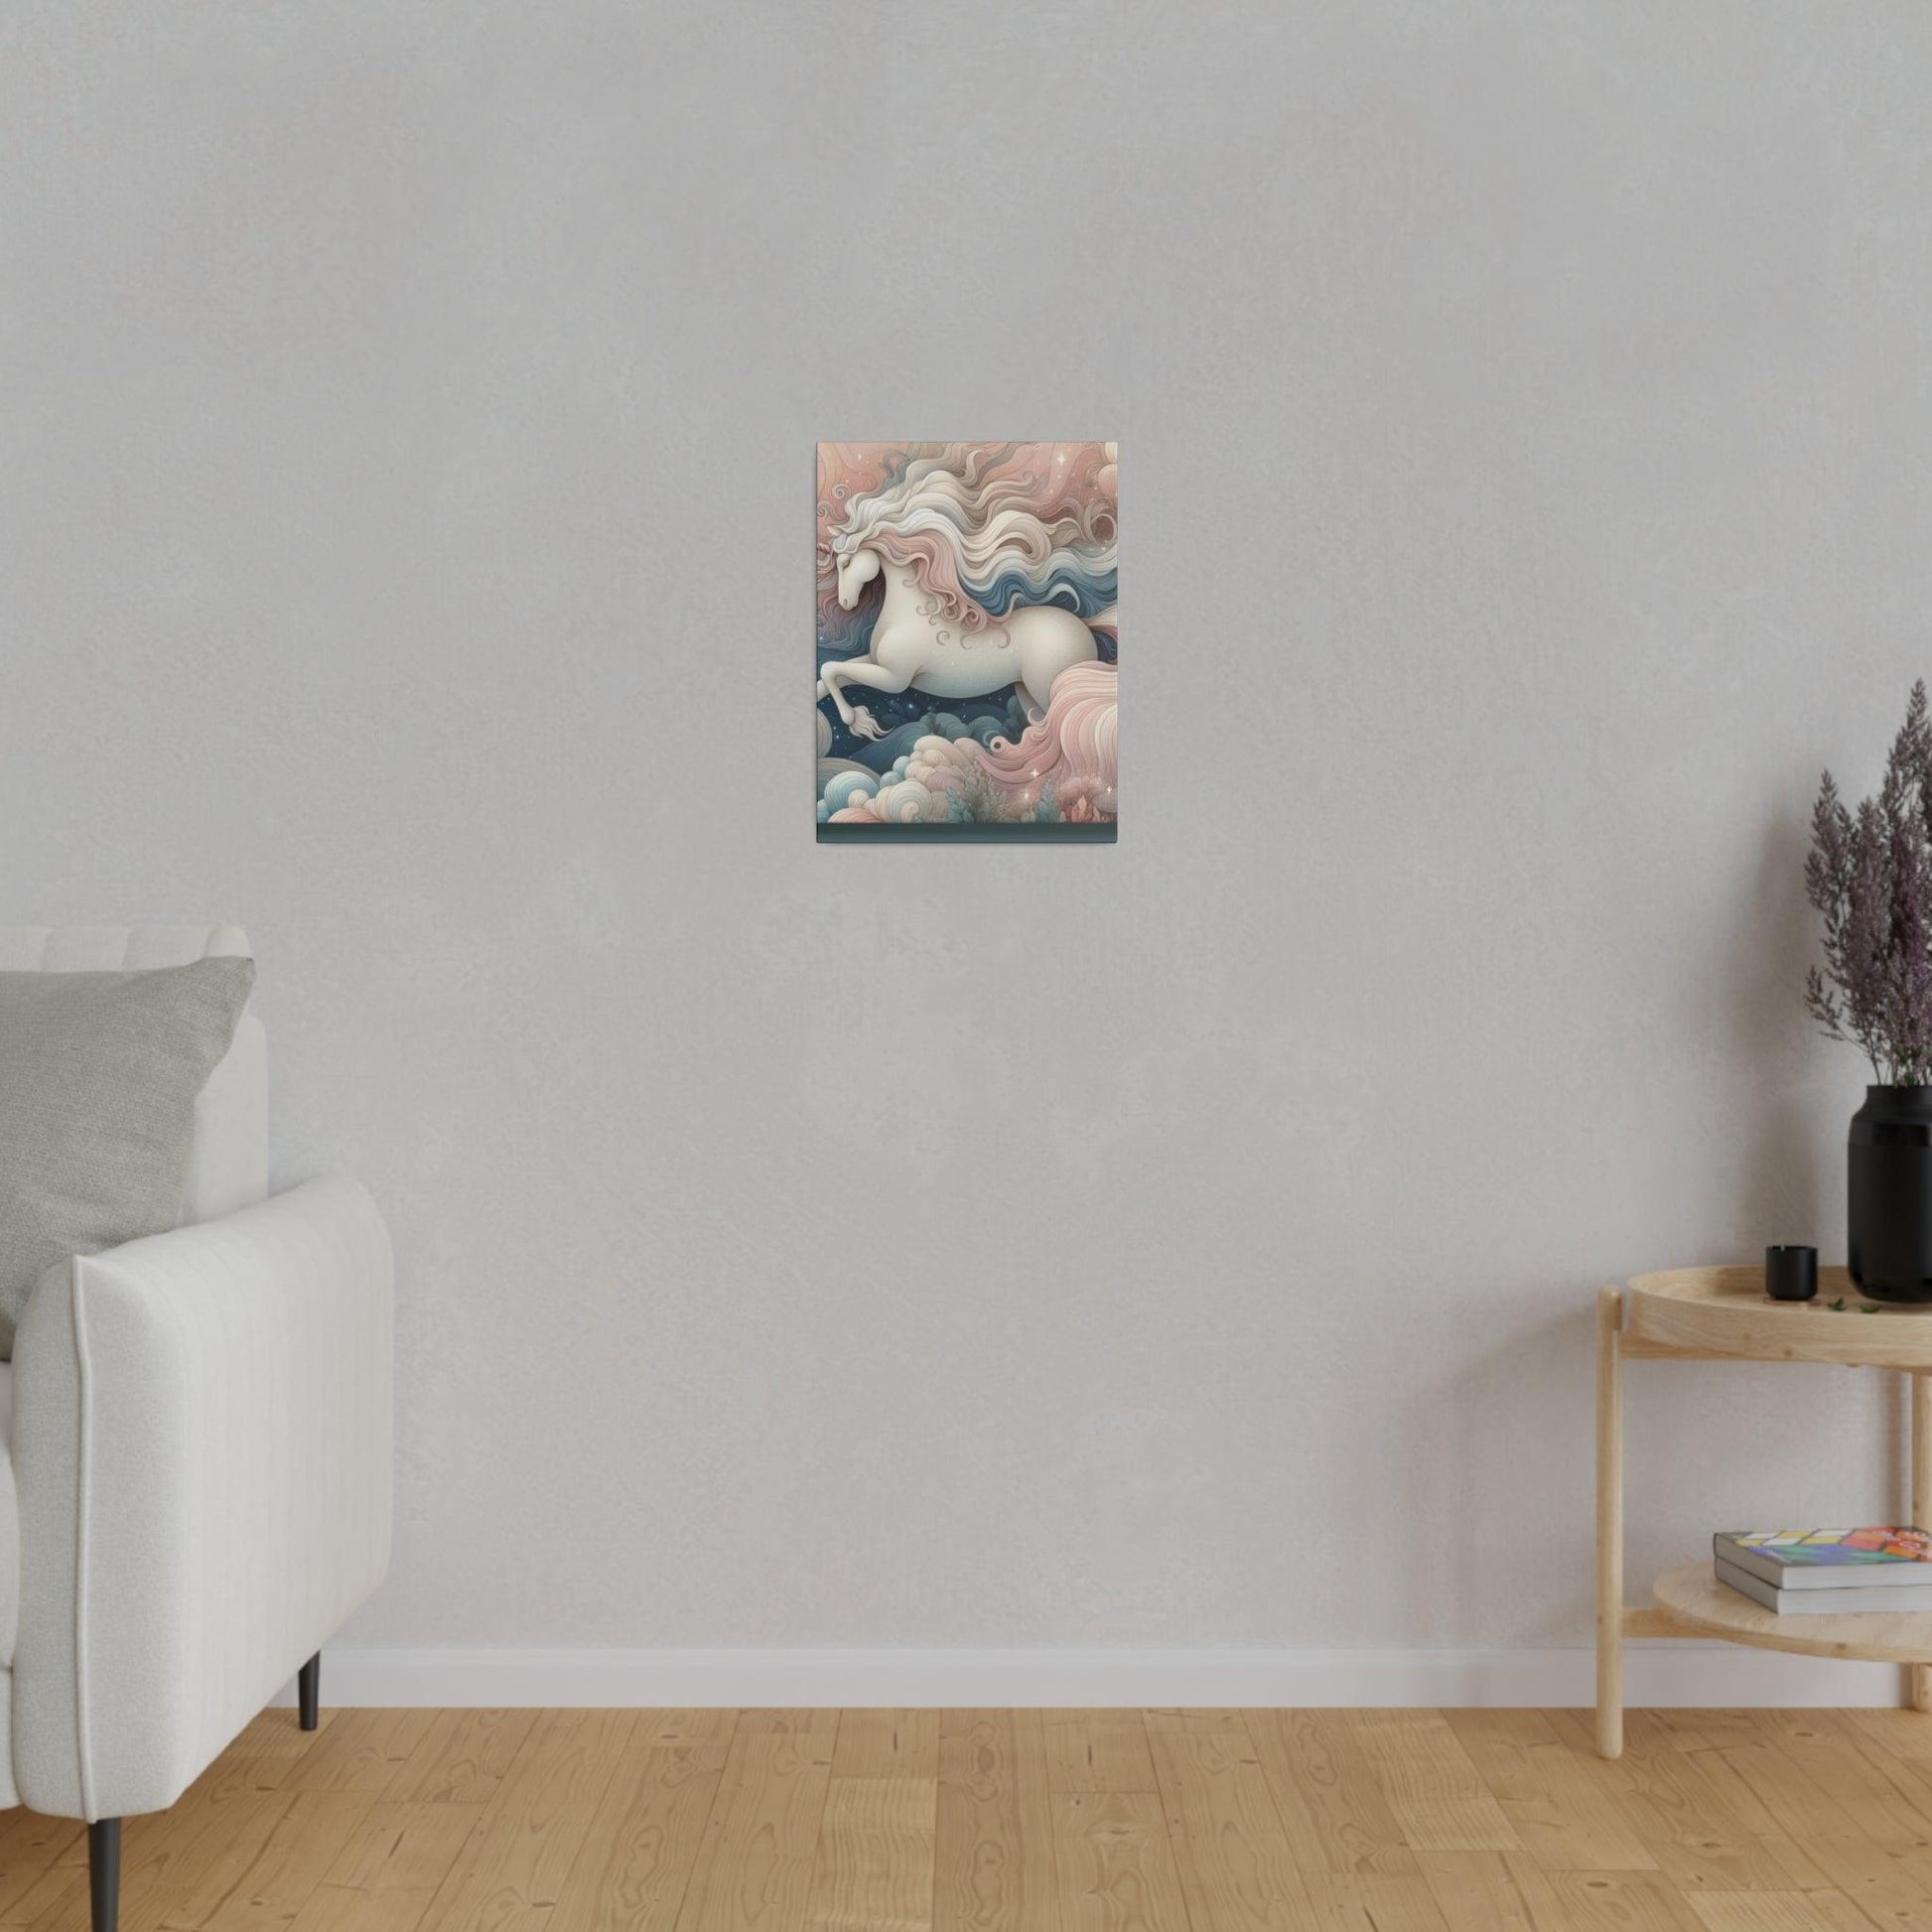 "Unicorn Enchantment: Dreamy Canvas Wall Art" - Canvas - The Alice Gallery